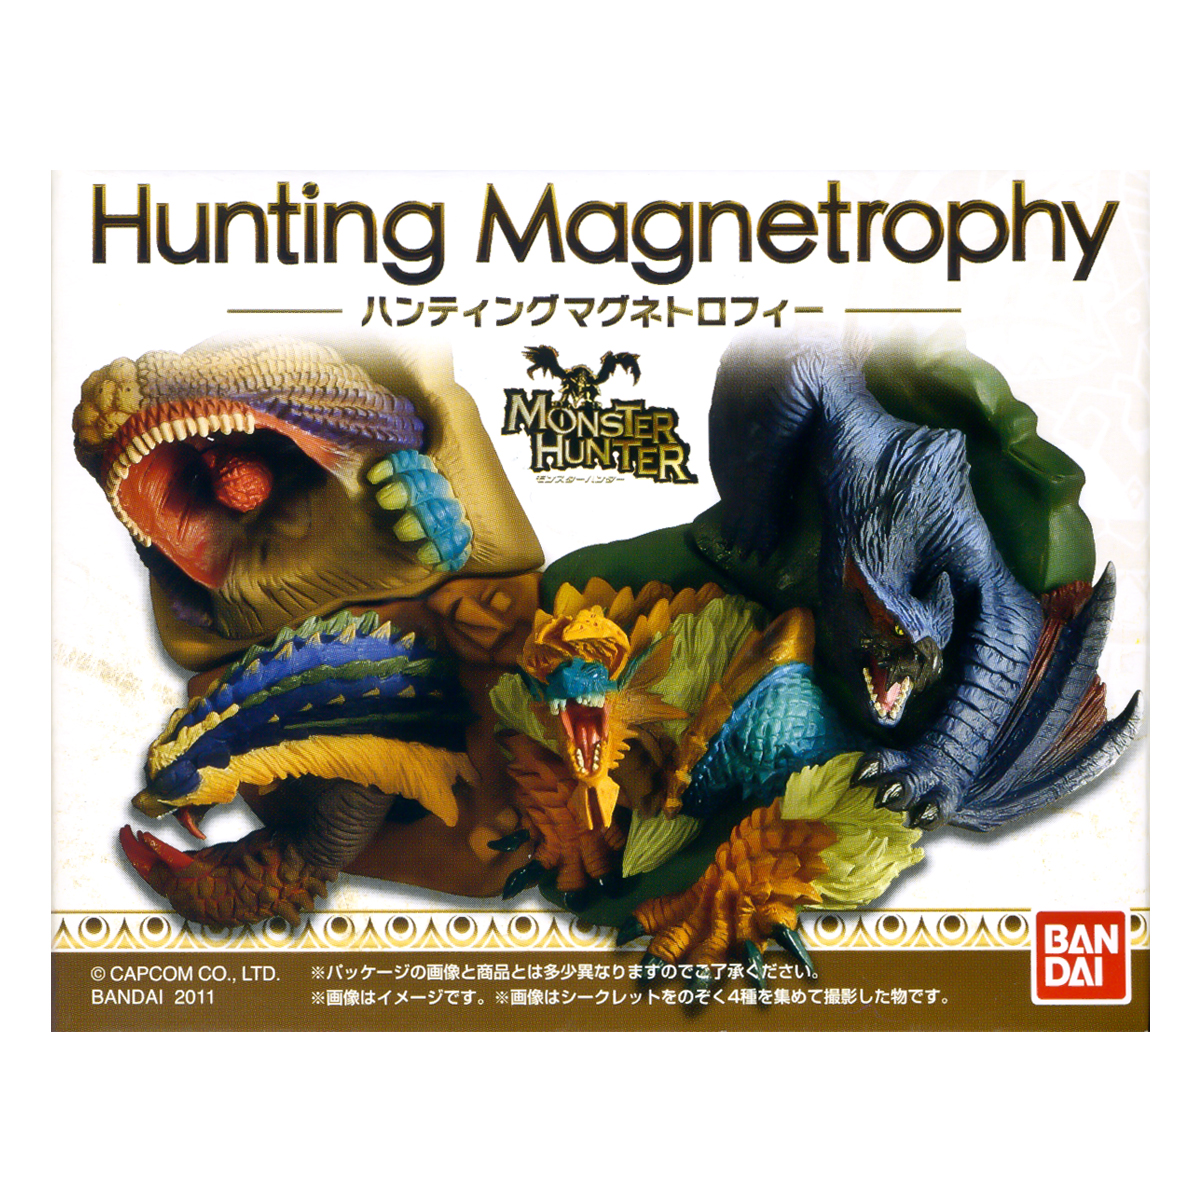 Monster Hunter Hunting Magnetrophy 1 Random Box Figure by Bandai